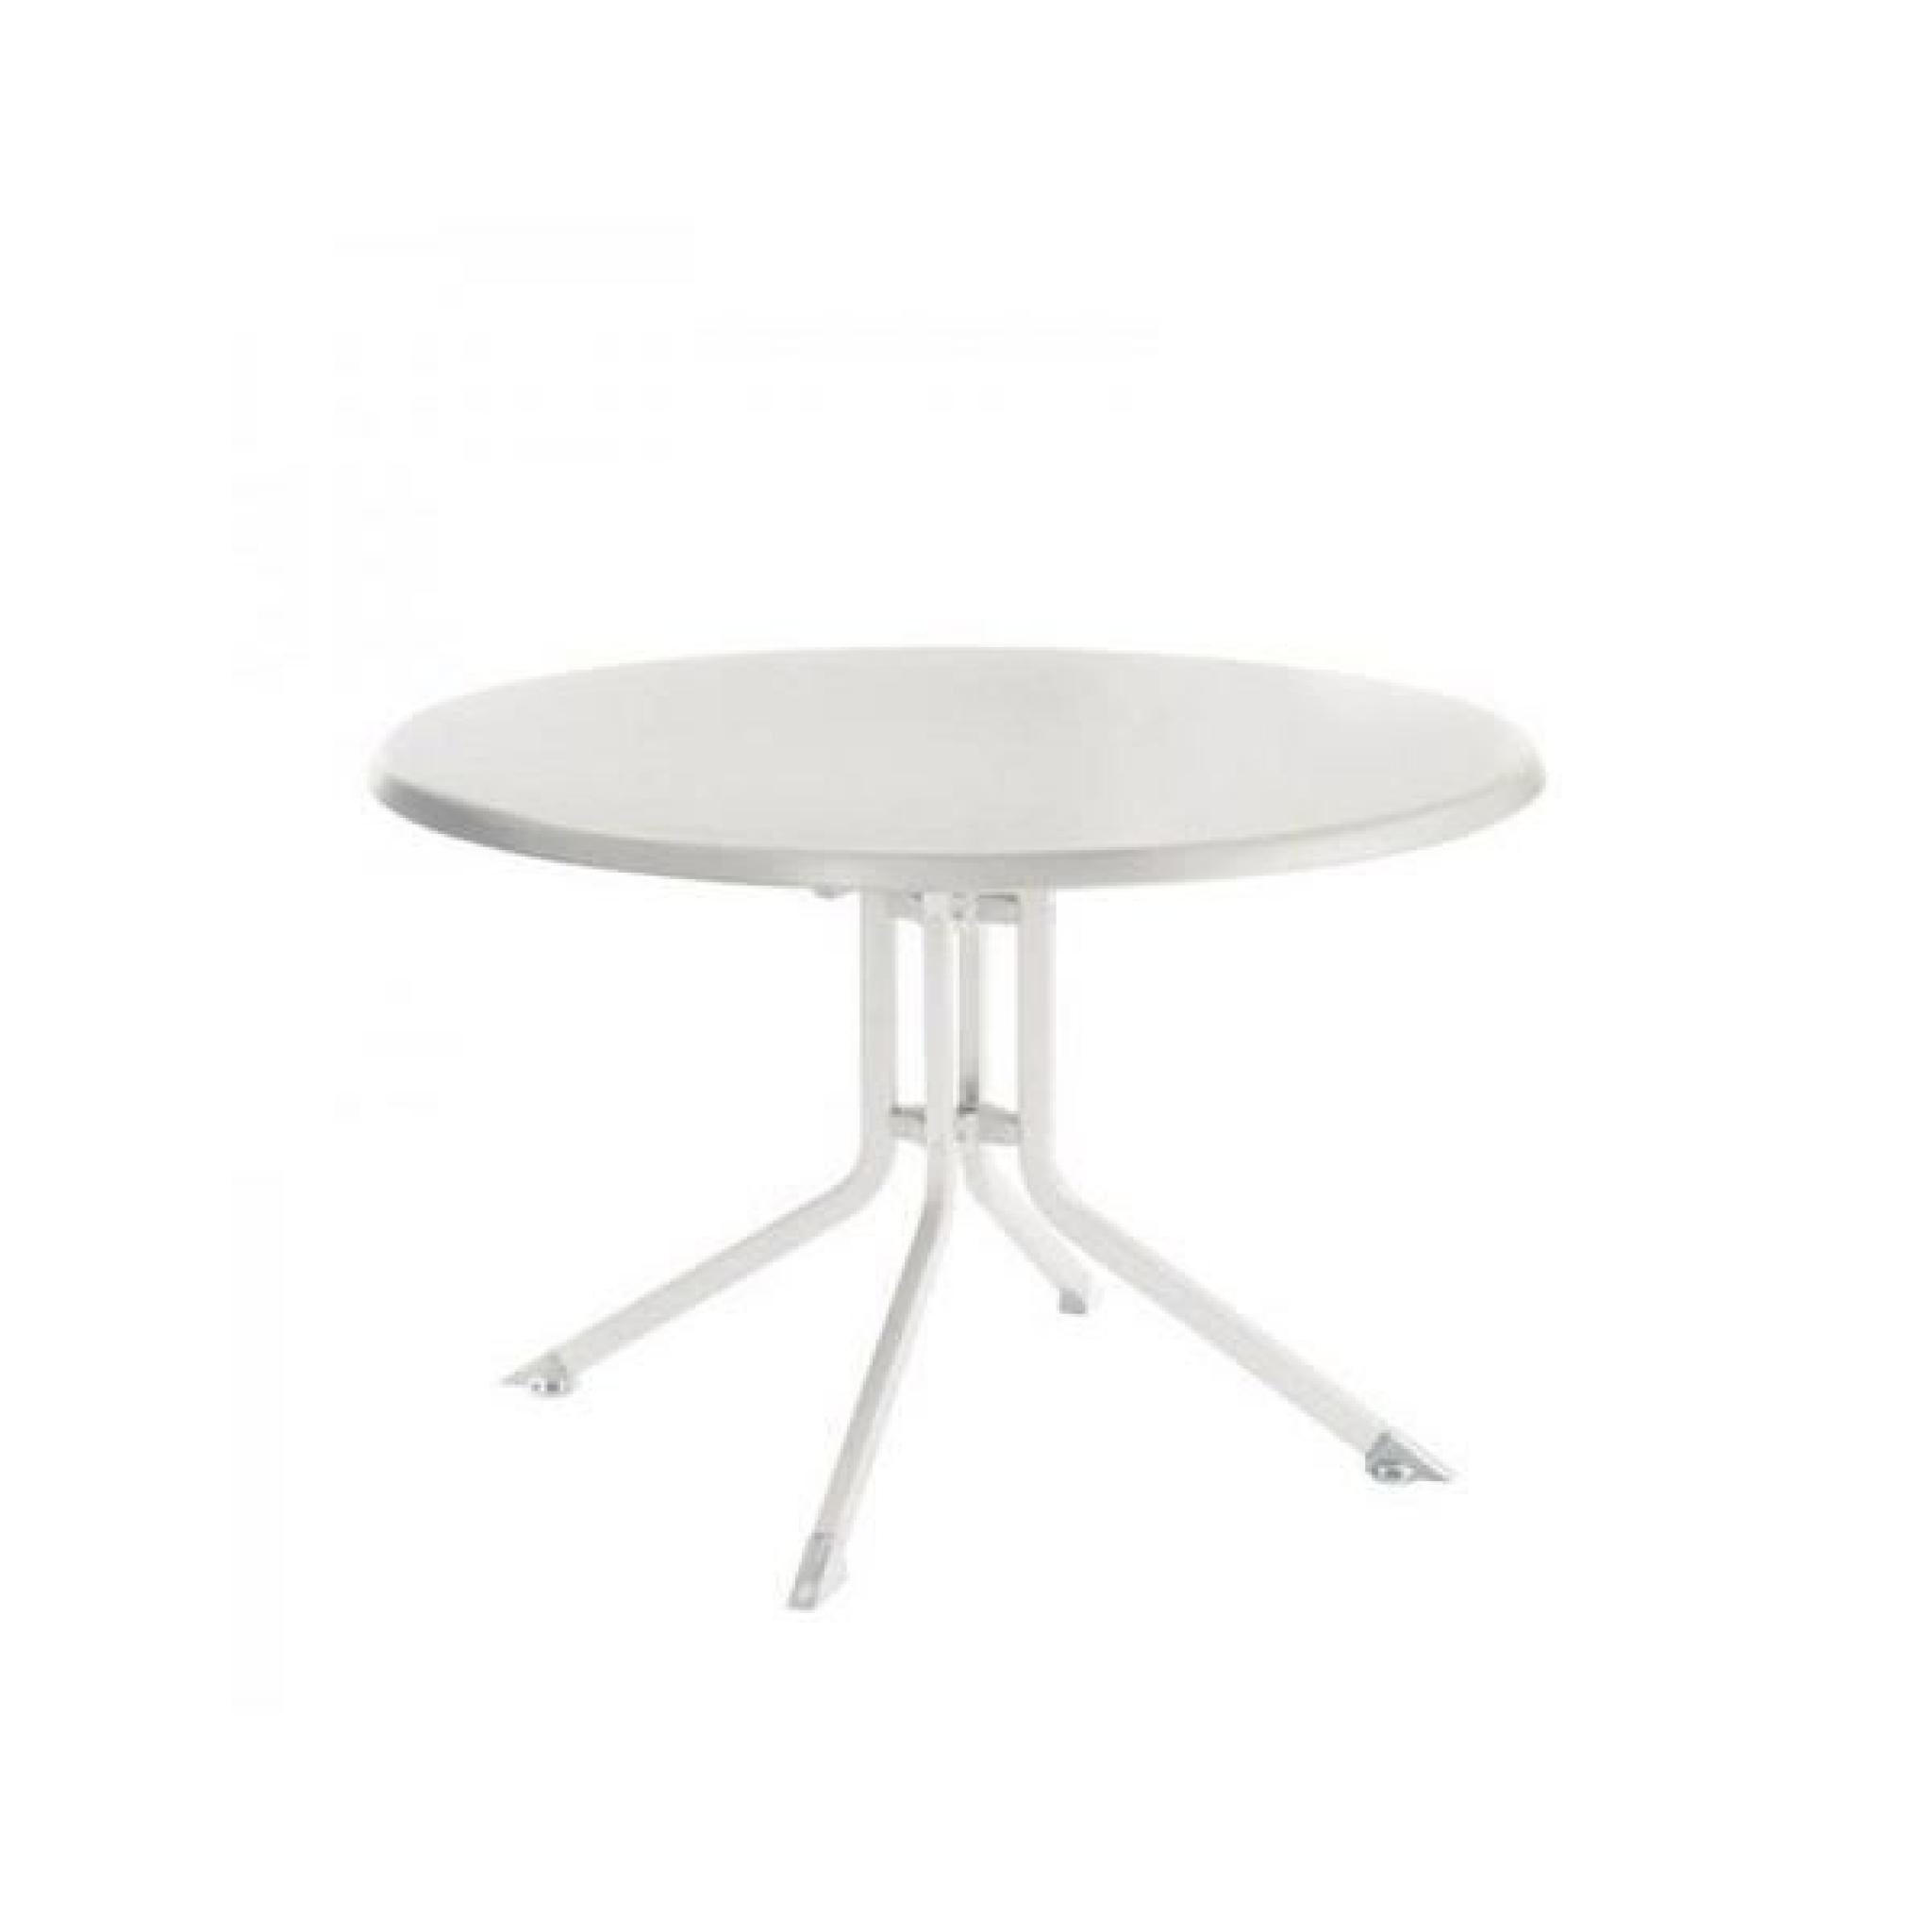 Table de jardin pliante blanche ADVANTAGE en aluminium - Ø 115 x H 74 cm